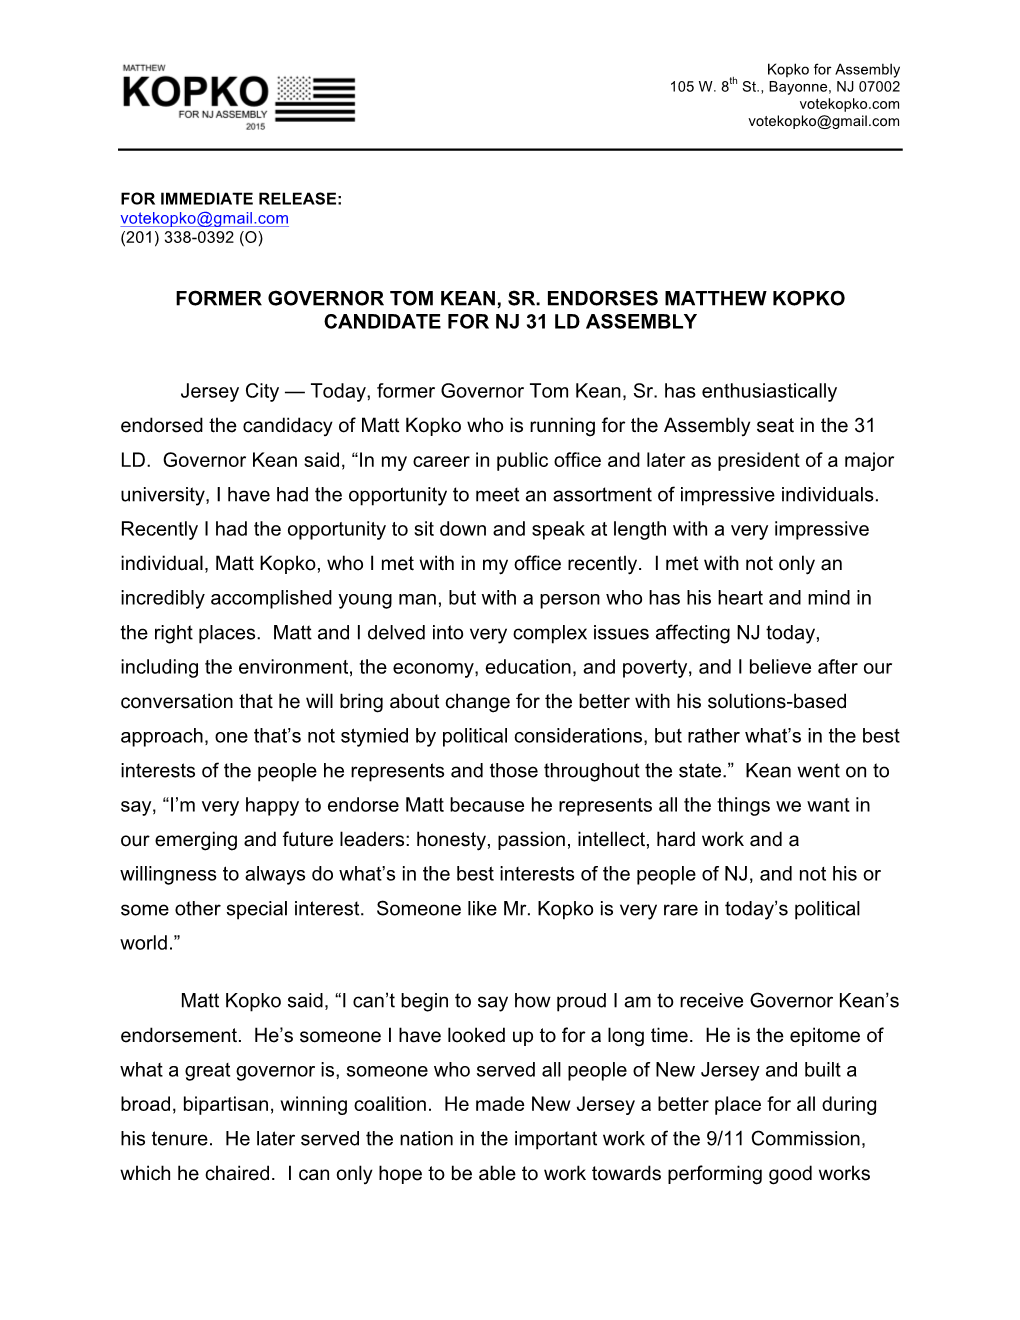 Former Governor Tom Kean, Sr. Endorses Matthew Kopko Candidate for Nj 31 Ld Assembly